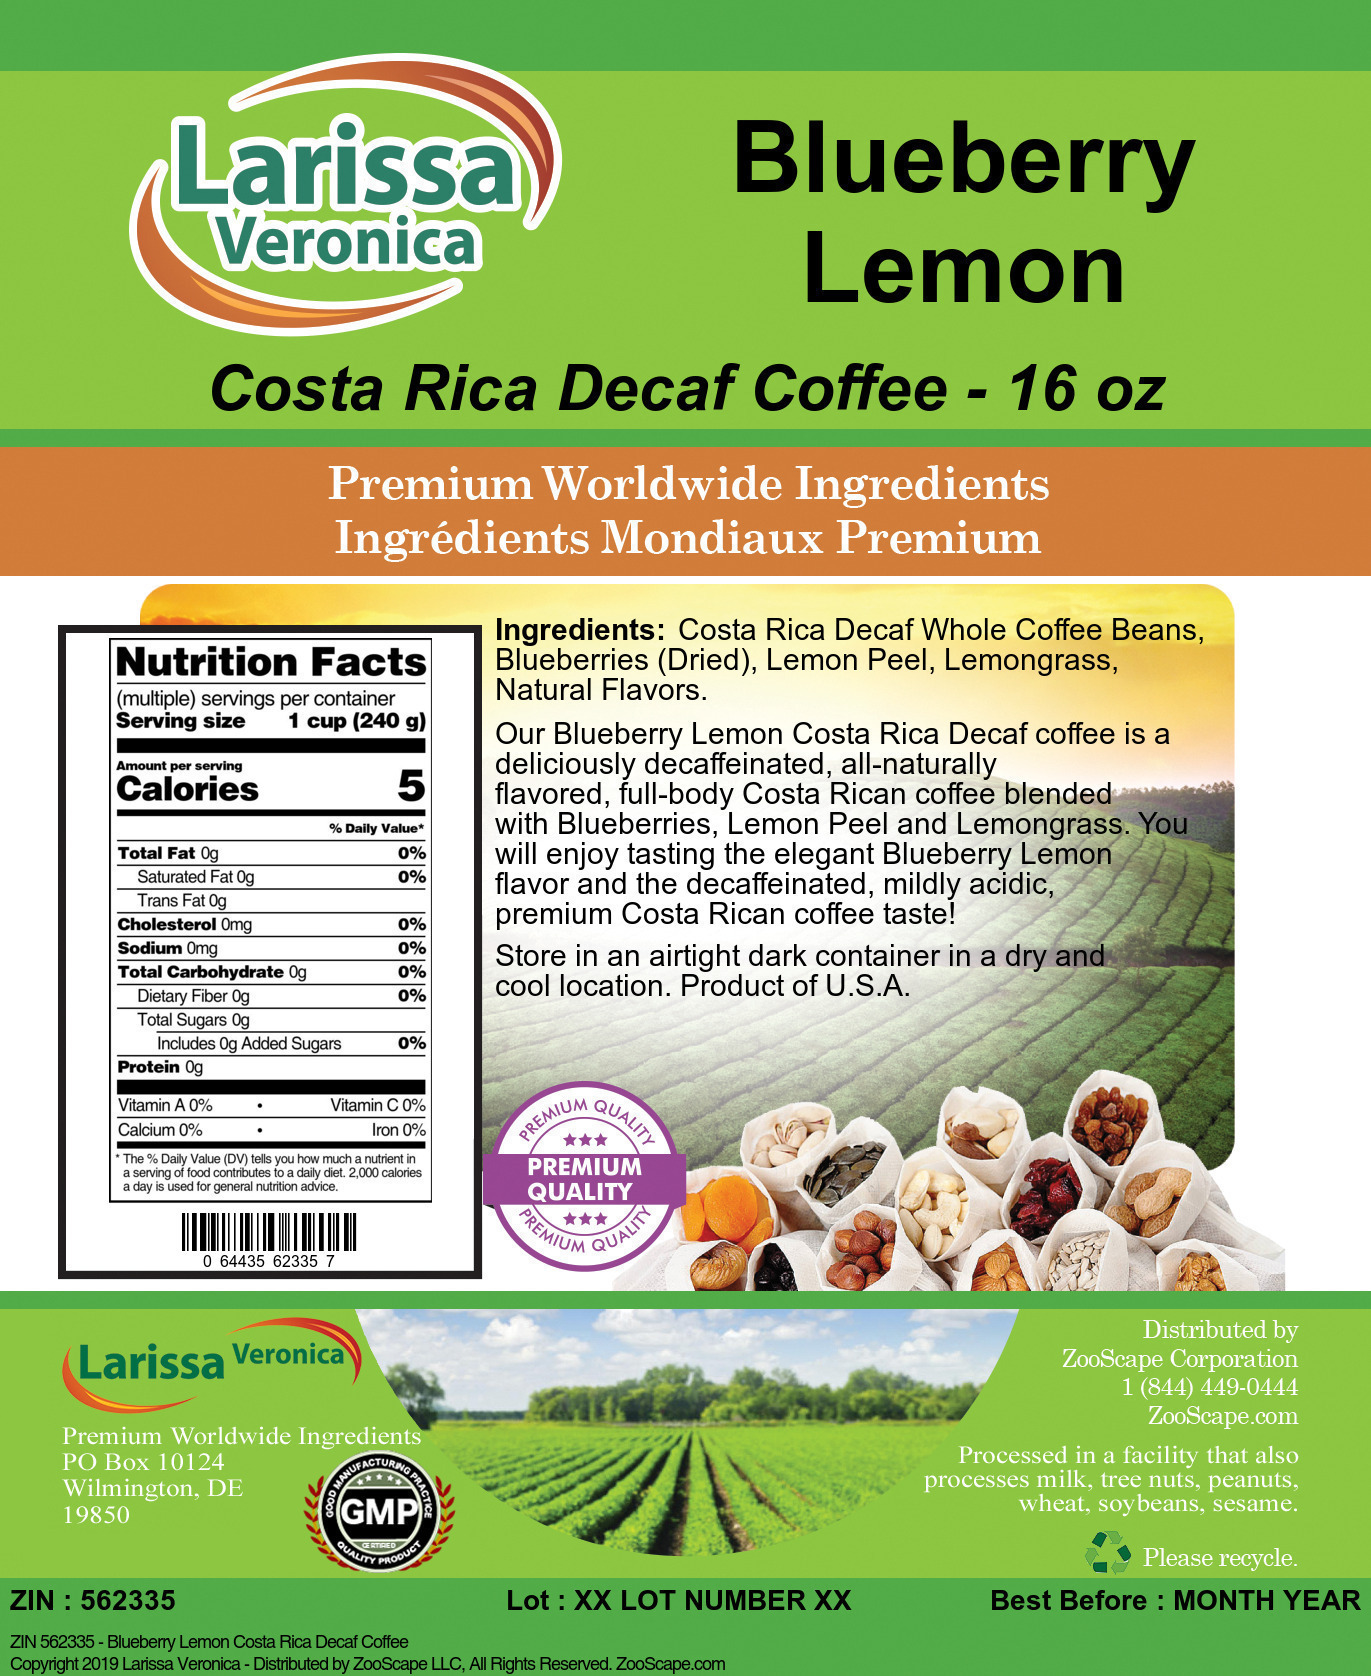 Blueberry Lemon Costa Rica Decaf Coffee - Label